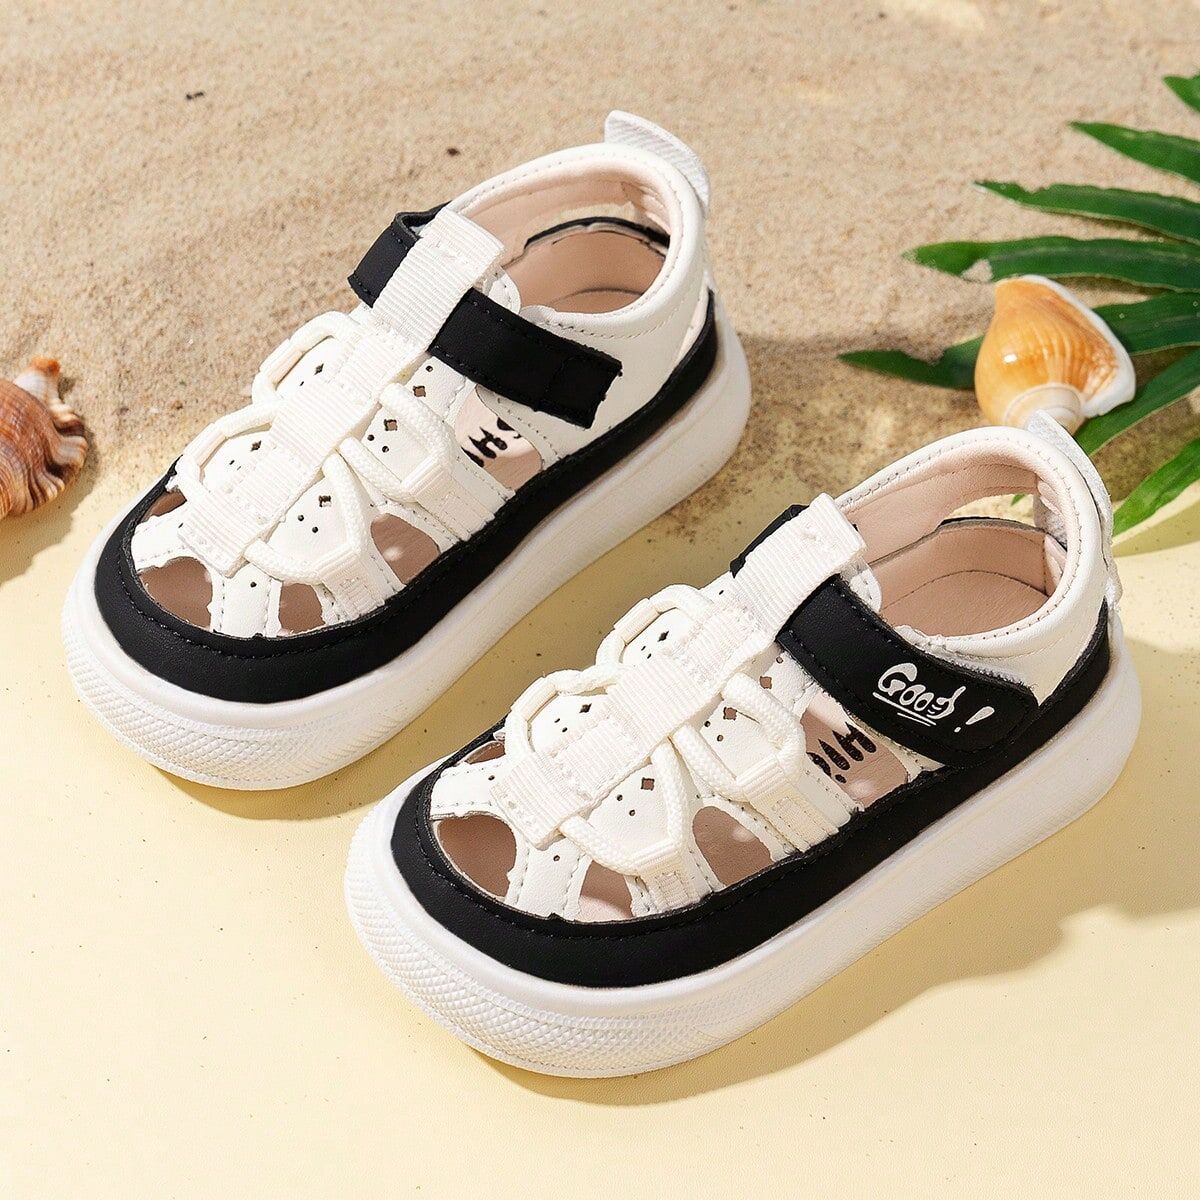 SHEIN New Summer Children's Shoes Korean Version Boy's Hollow Out Sneakers, Casual Beach Sandals For Kids Aged 1-6 Black EUR20,EUR21,EUR22,EUR23,EUR24,EUR25,EUR26,EUR27,EUR28,EUR29